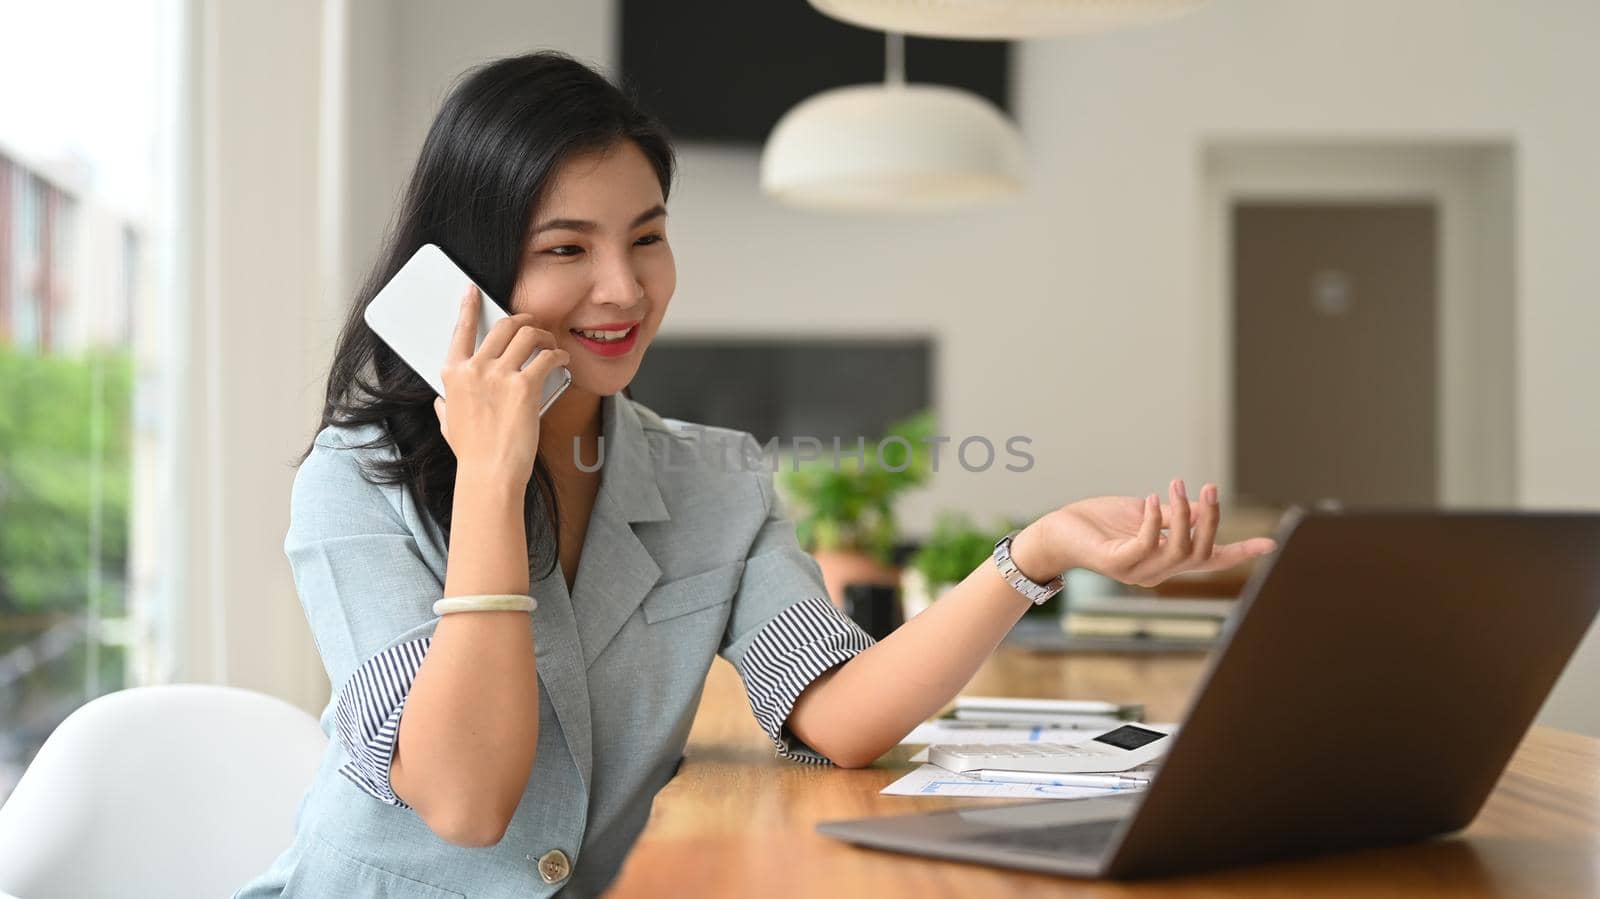 Asian female employee having pleasant phone conversation and using laptop at office desk by prathanchorruangsak